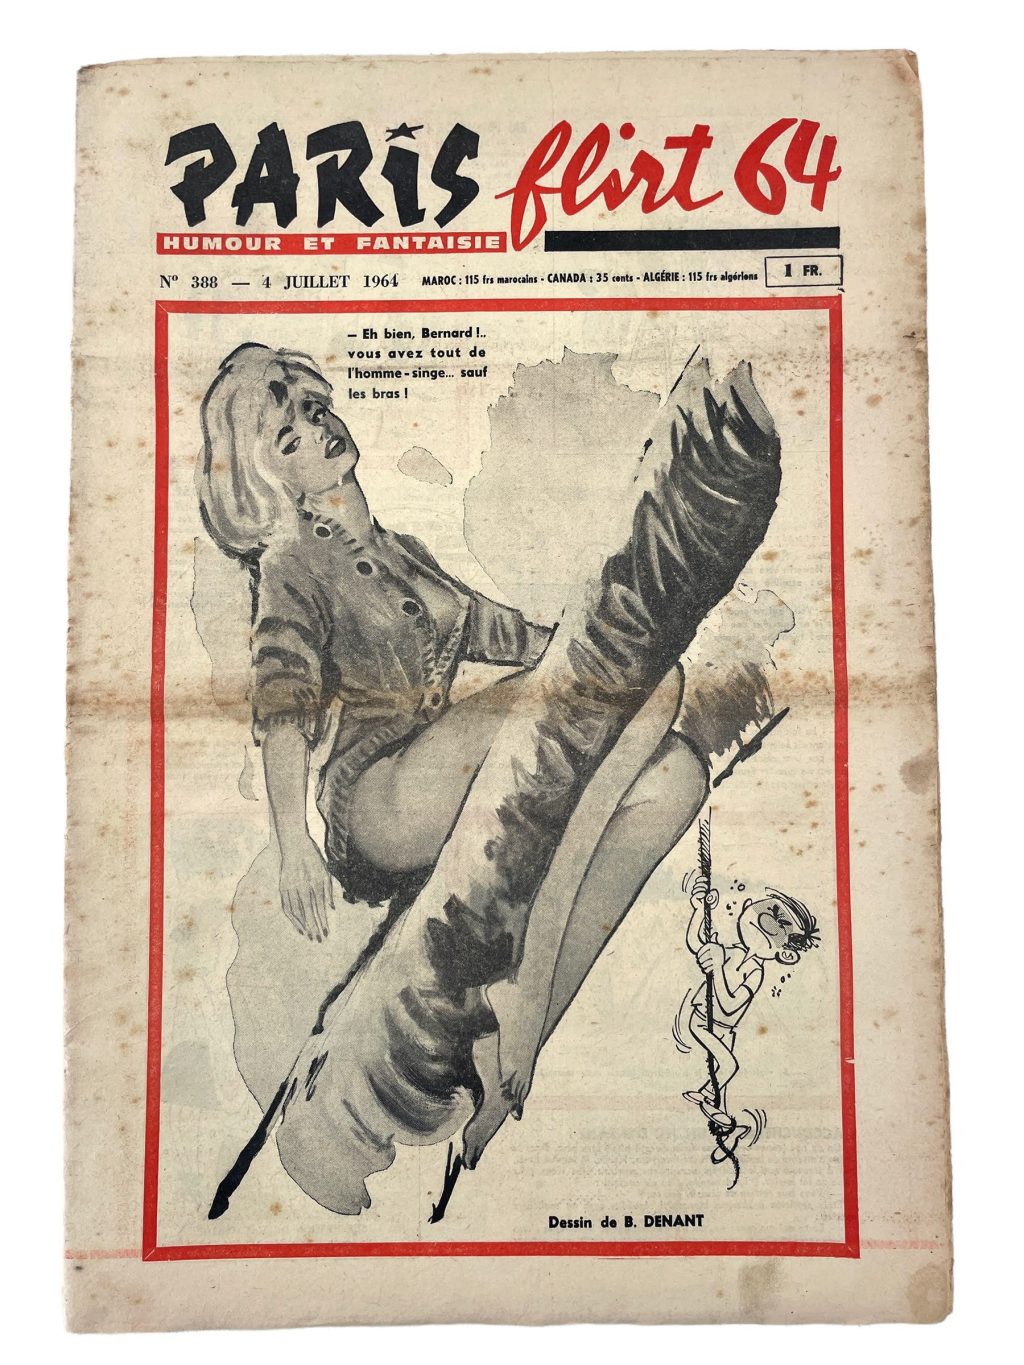 Vintage French Paris Flirt Number 388 4/7/1964 Adult Comic Newspaper Humour Fantasy Cartoons Romance Memorabilia Collector c1964-65 / EVE